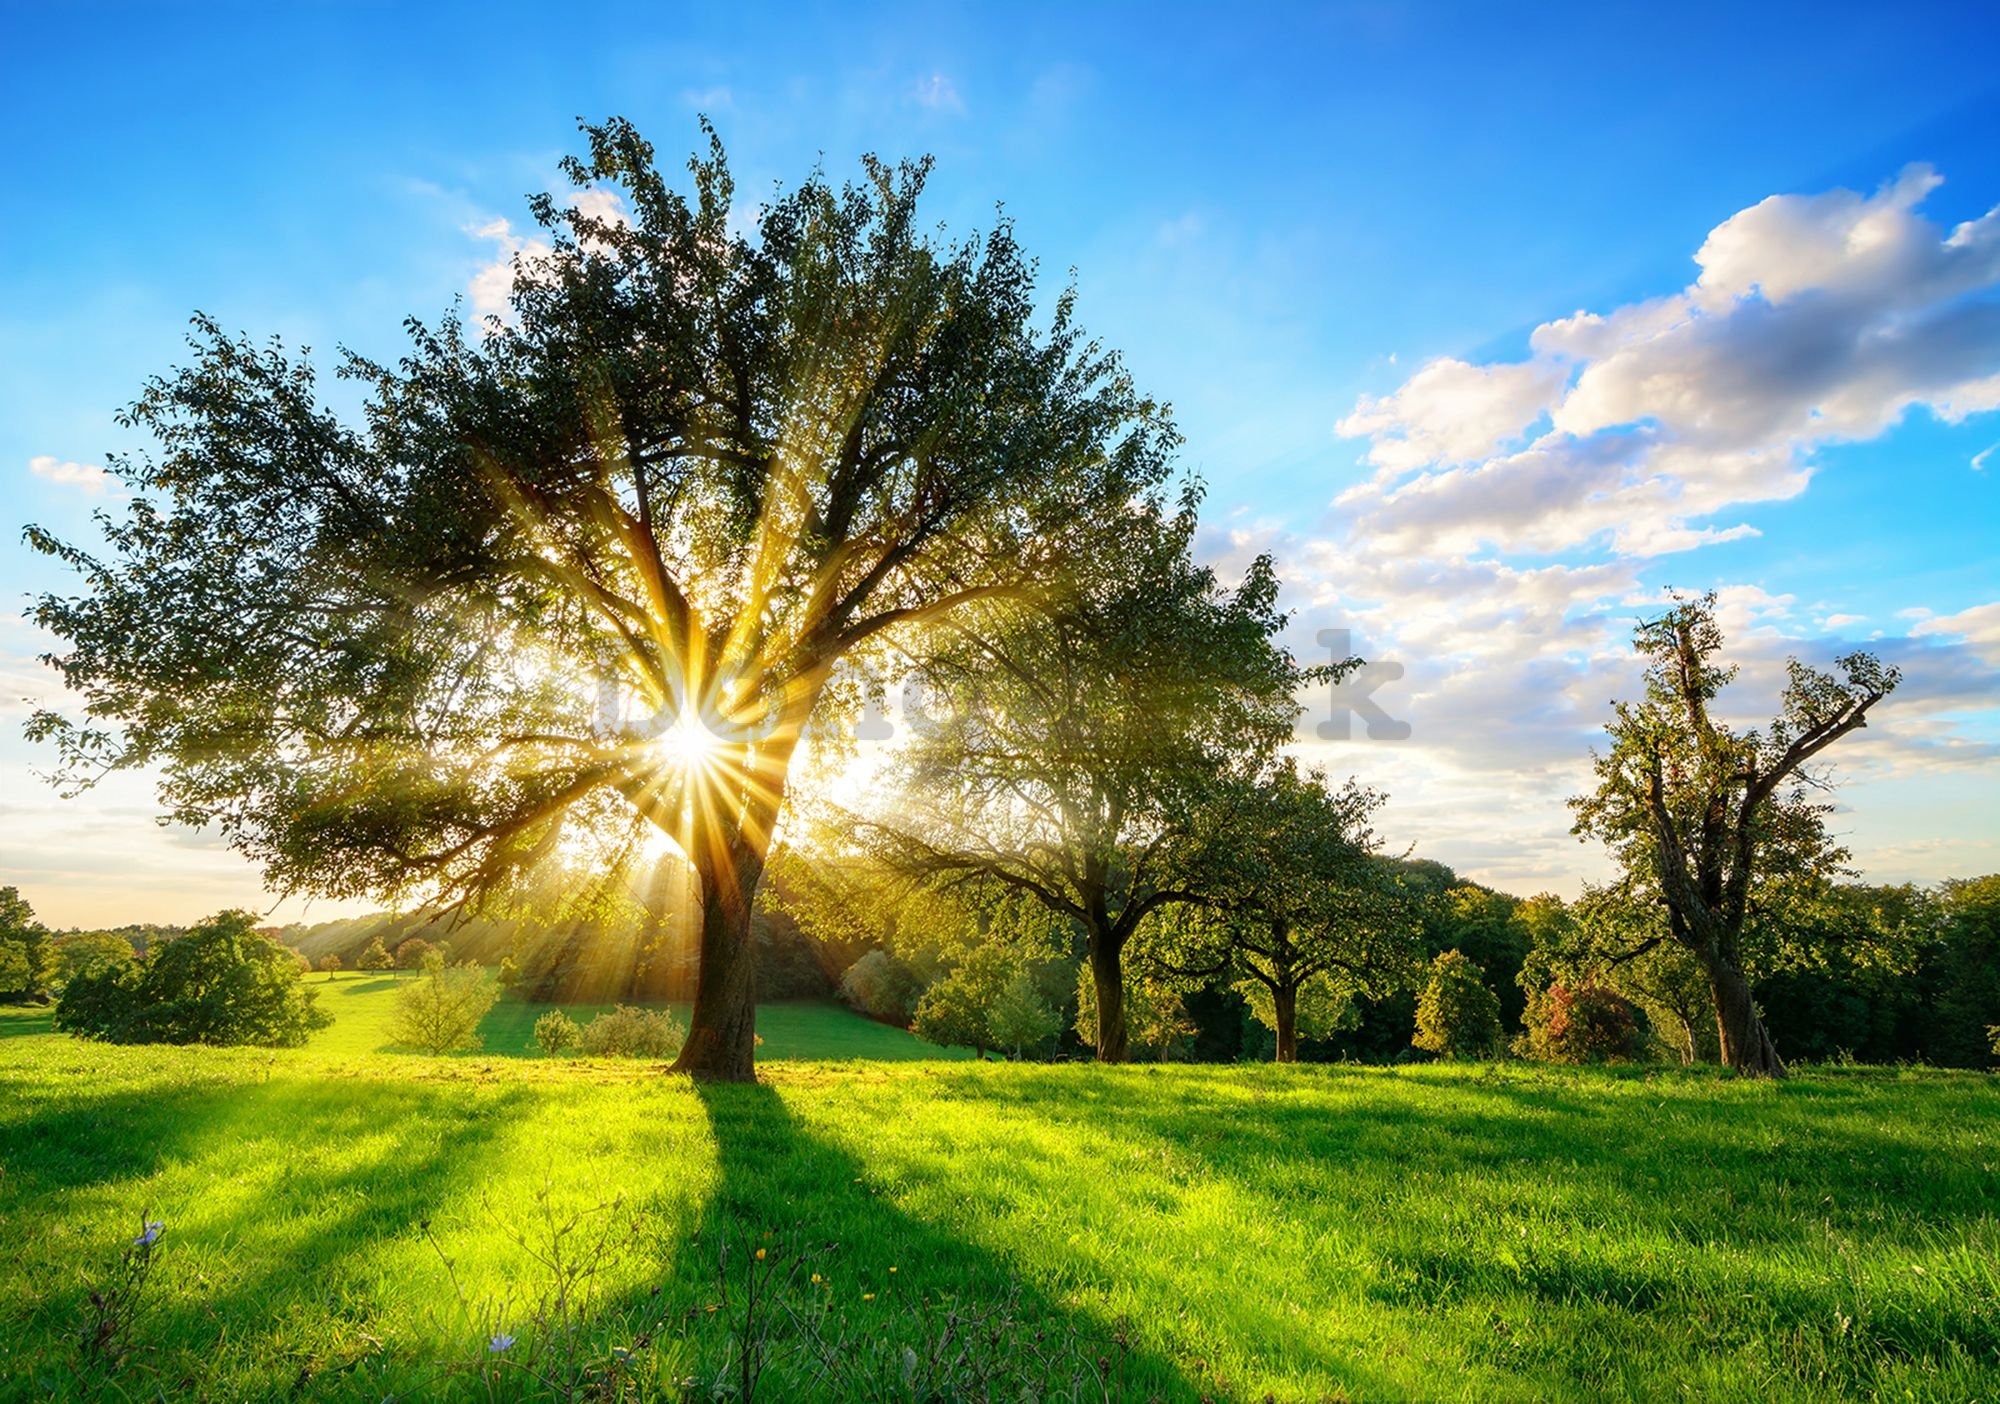 Fototapeta vliesová: Slnko za stromom - 254x368 cm